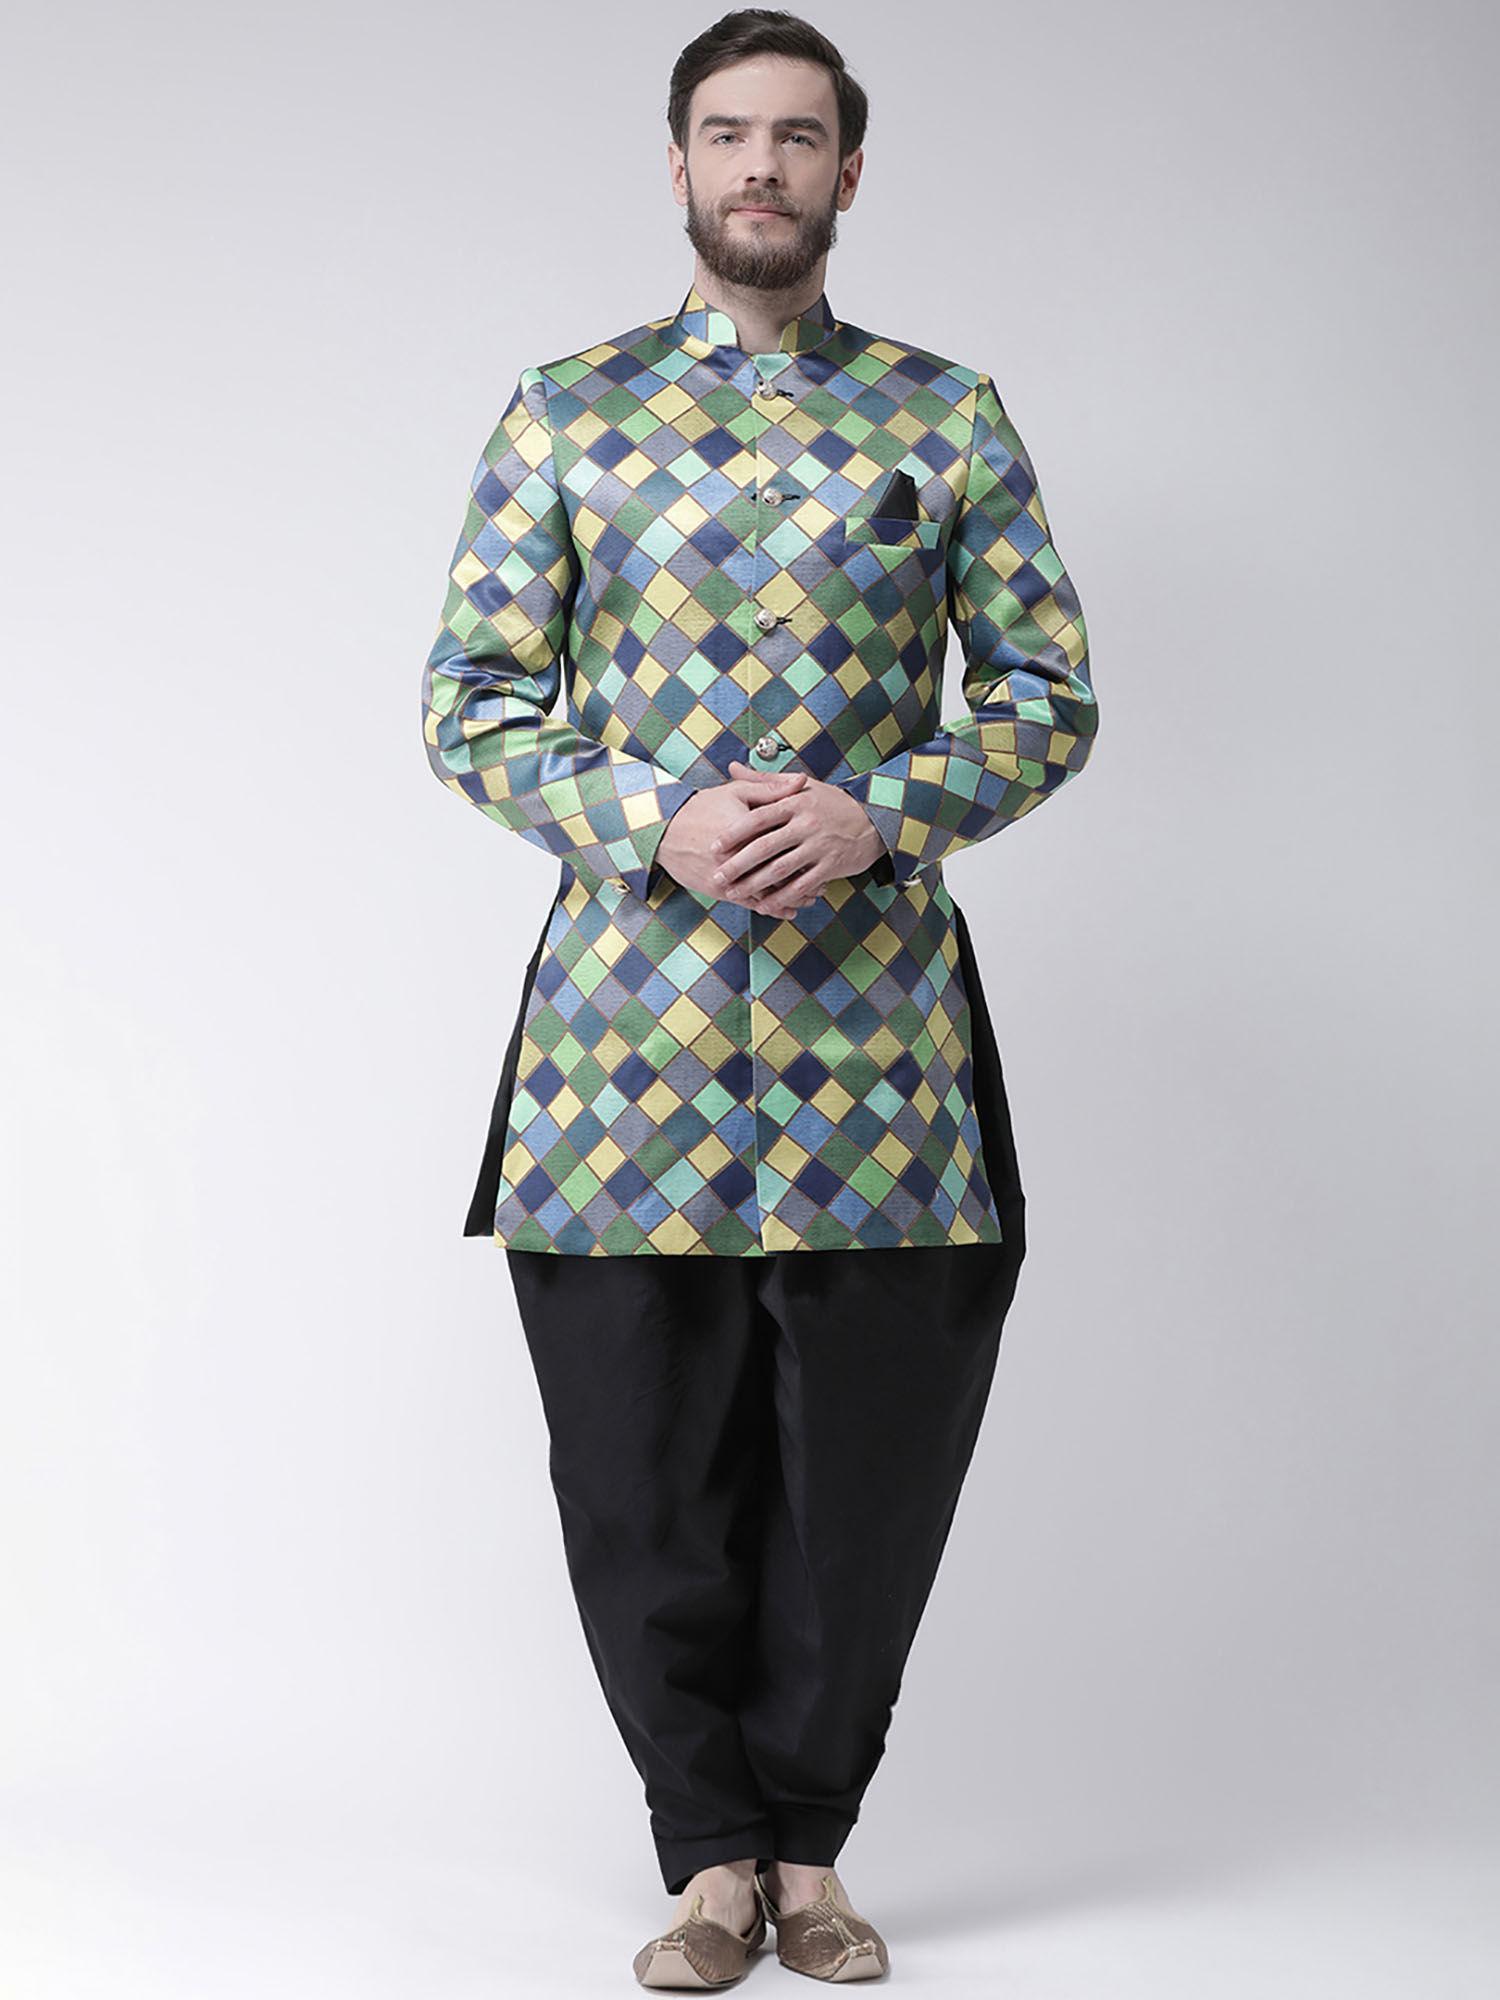 Multi-Color Printed Sherwani And Pyjama (Set of 2)